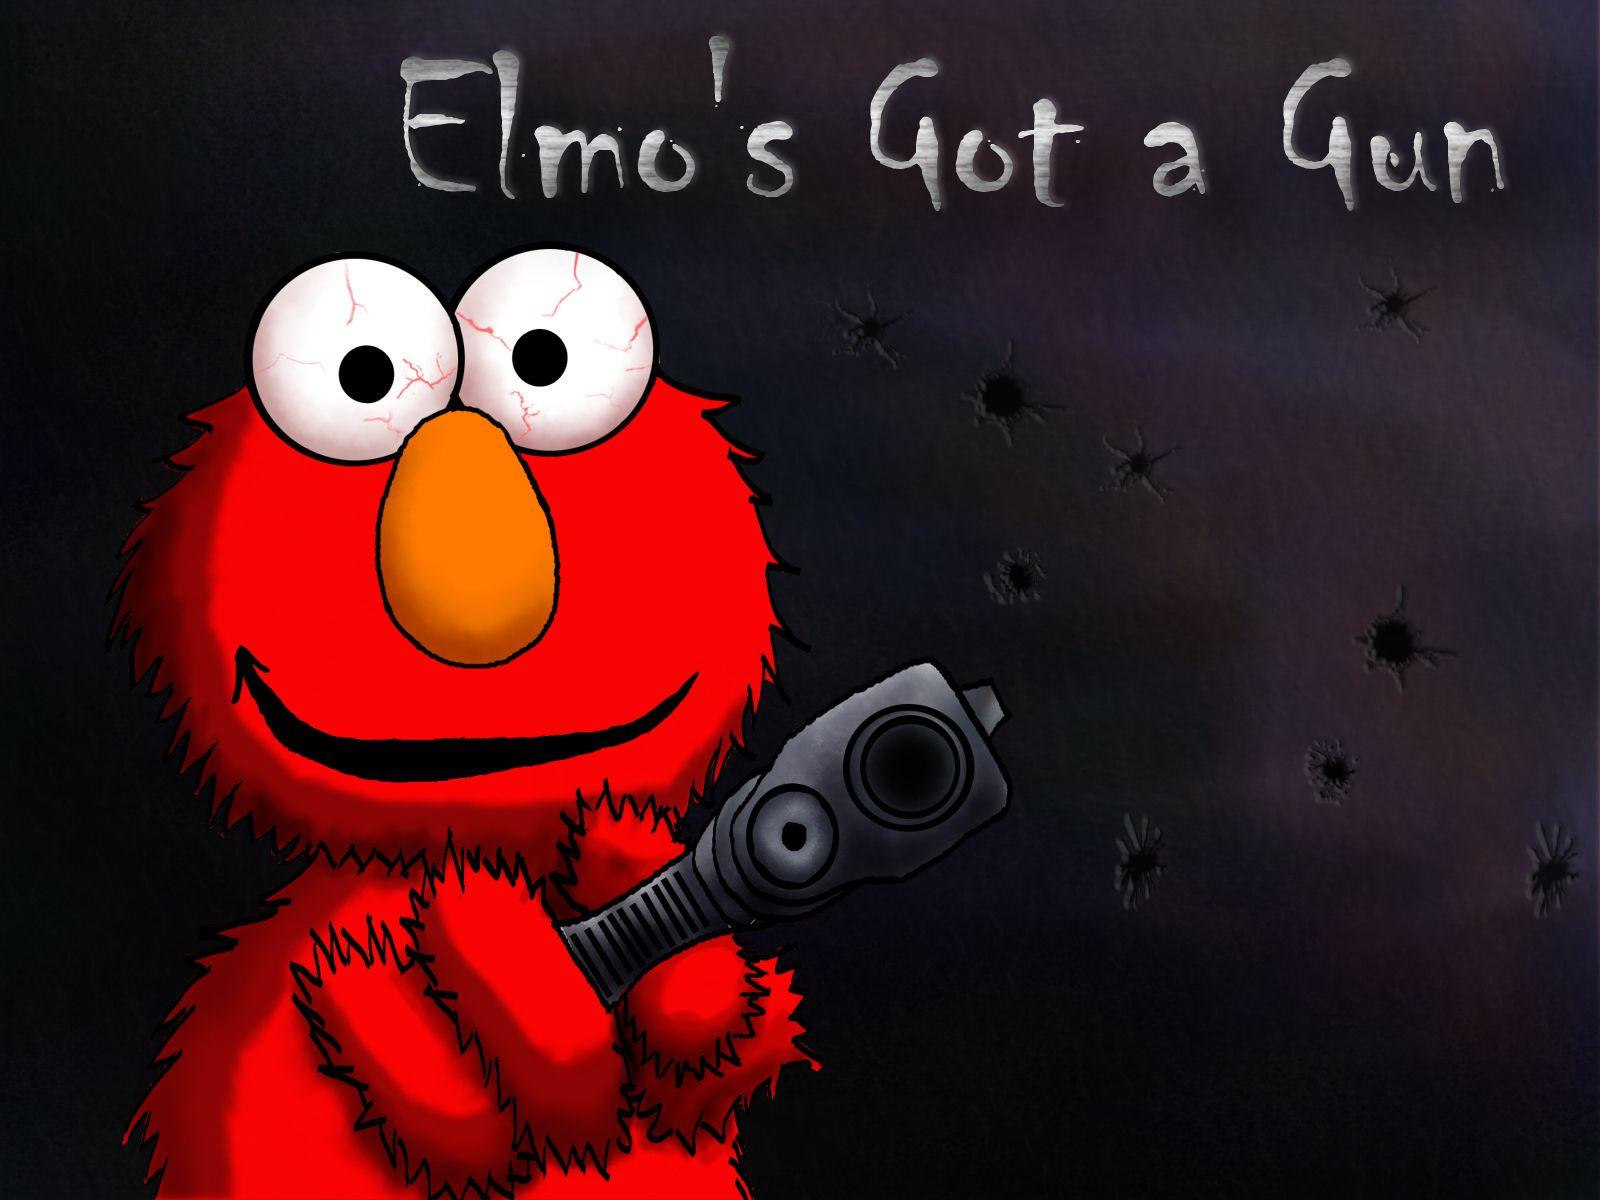 evil elmo with gun